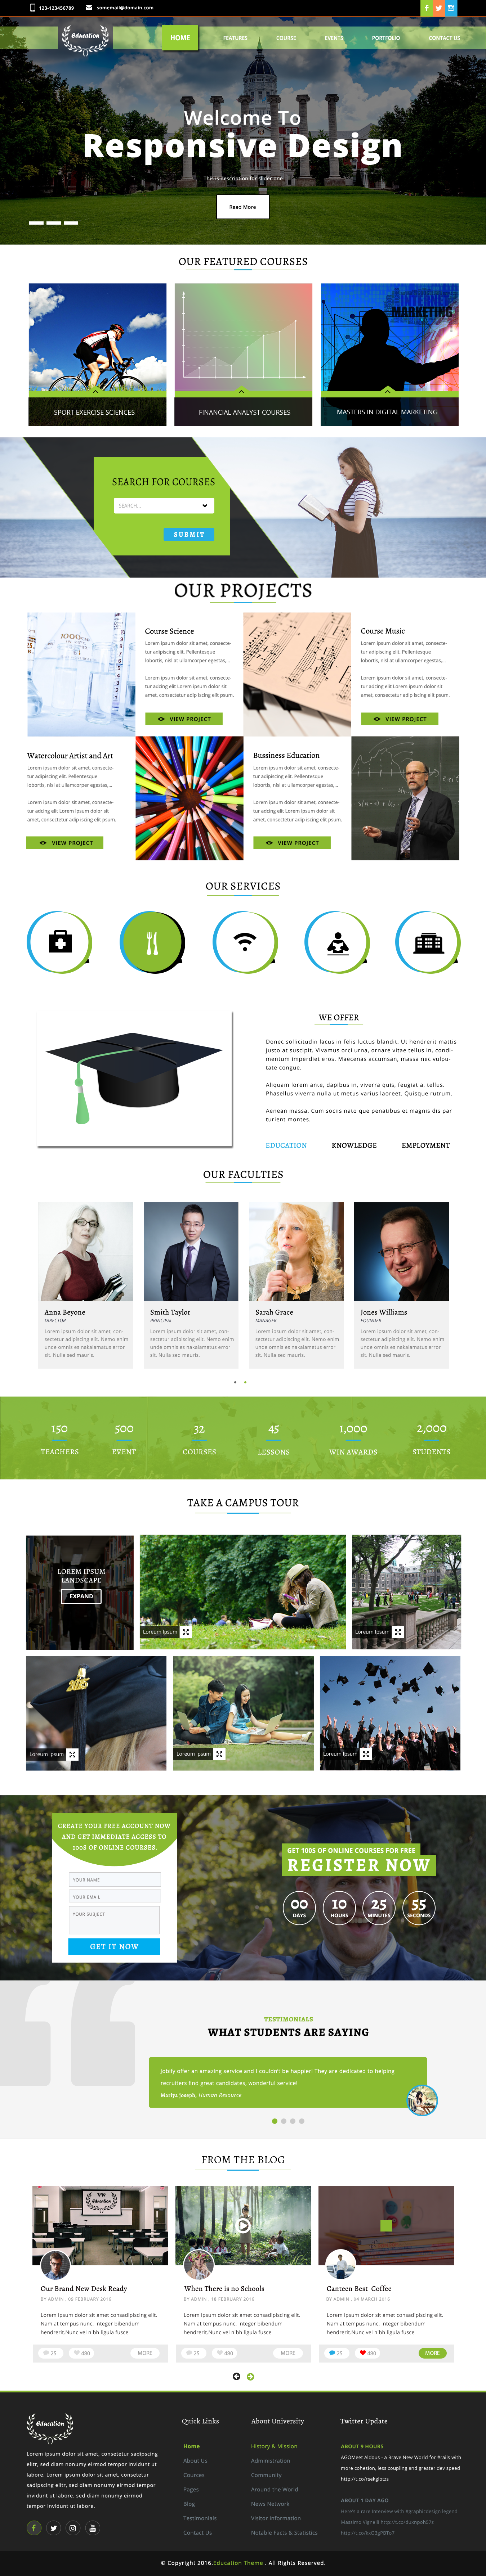 Free Education WordPress Theme